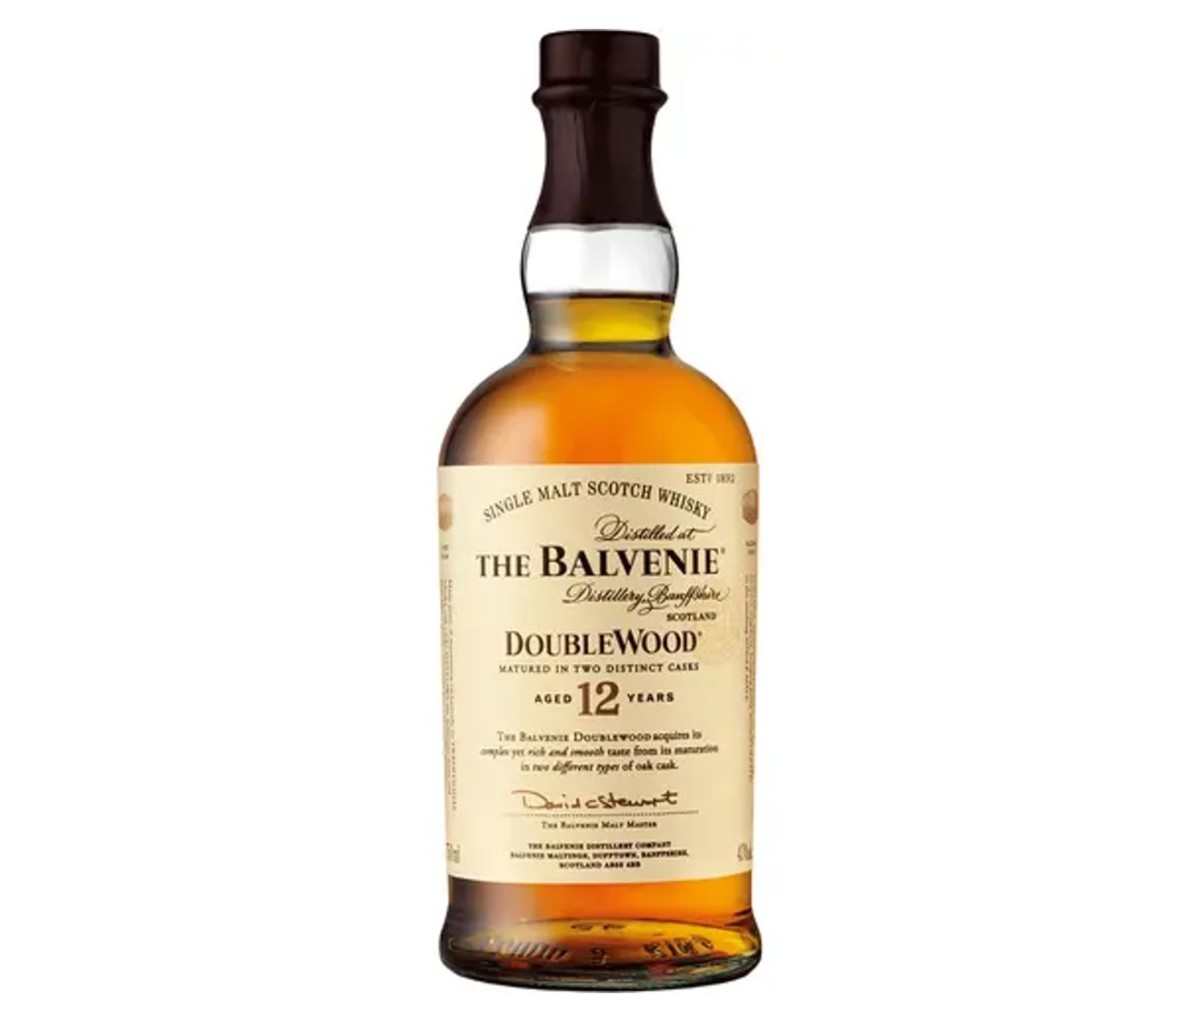 A bottle of The Balvenie DoubleWood 12